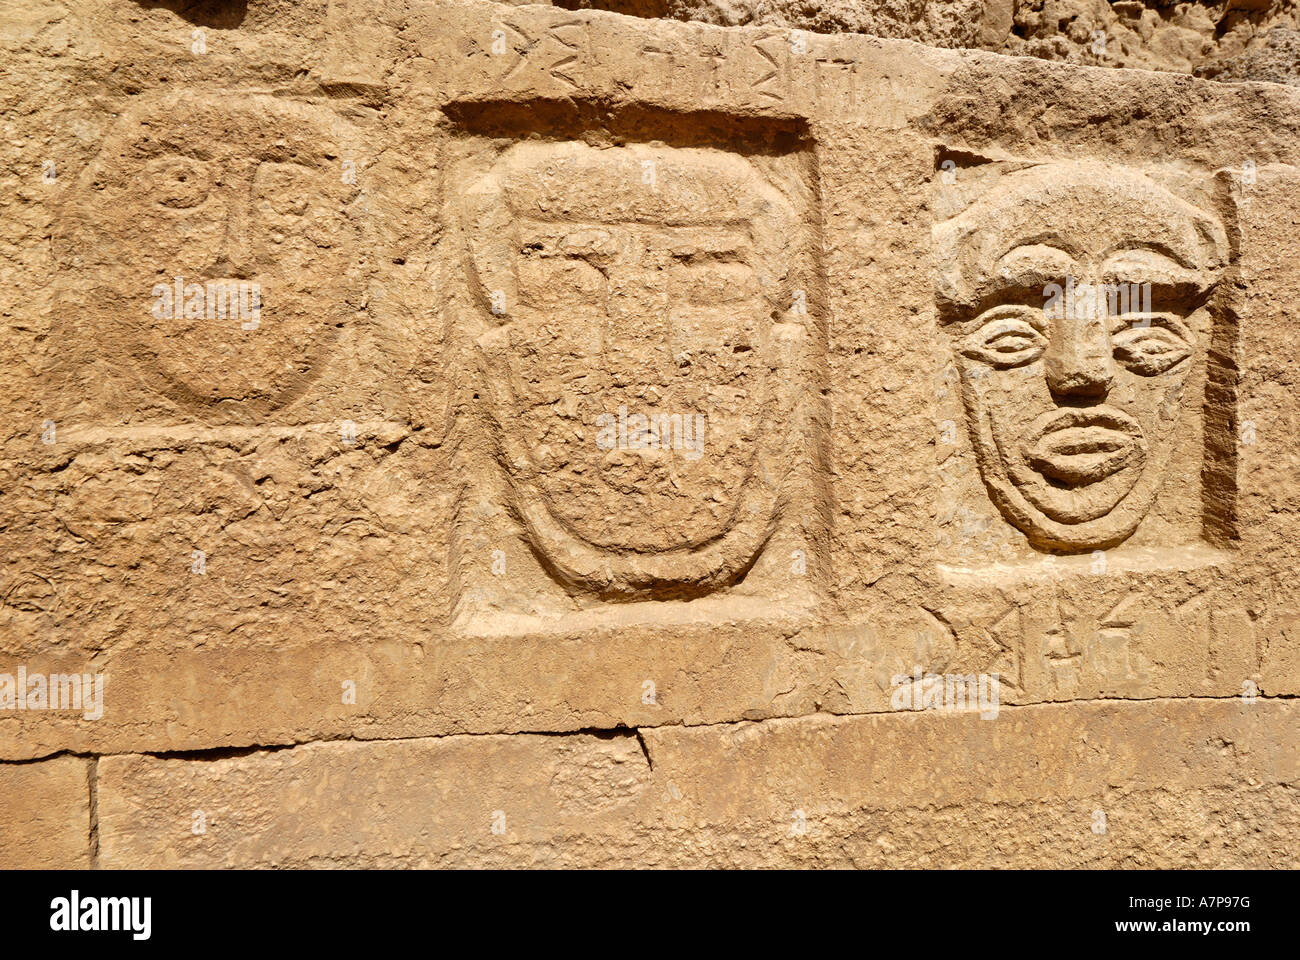 antique portraits at the archeological site of Marib Jemen Stock Photo